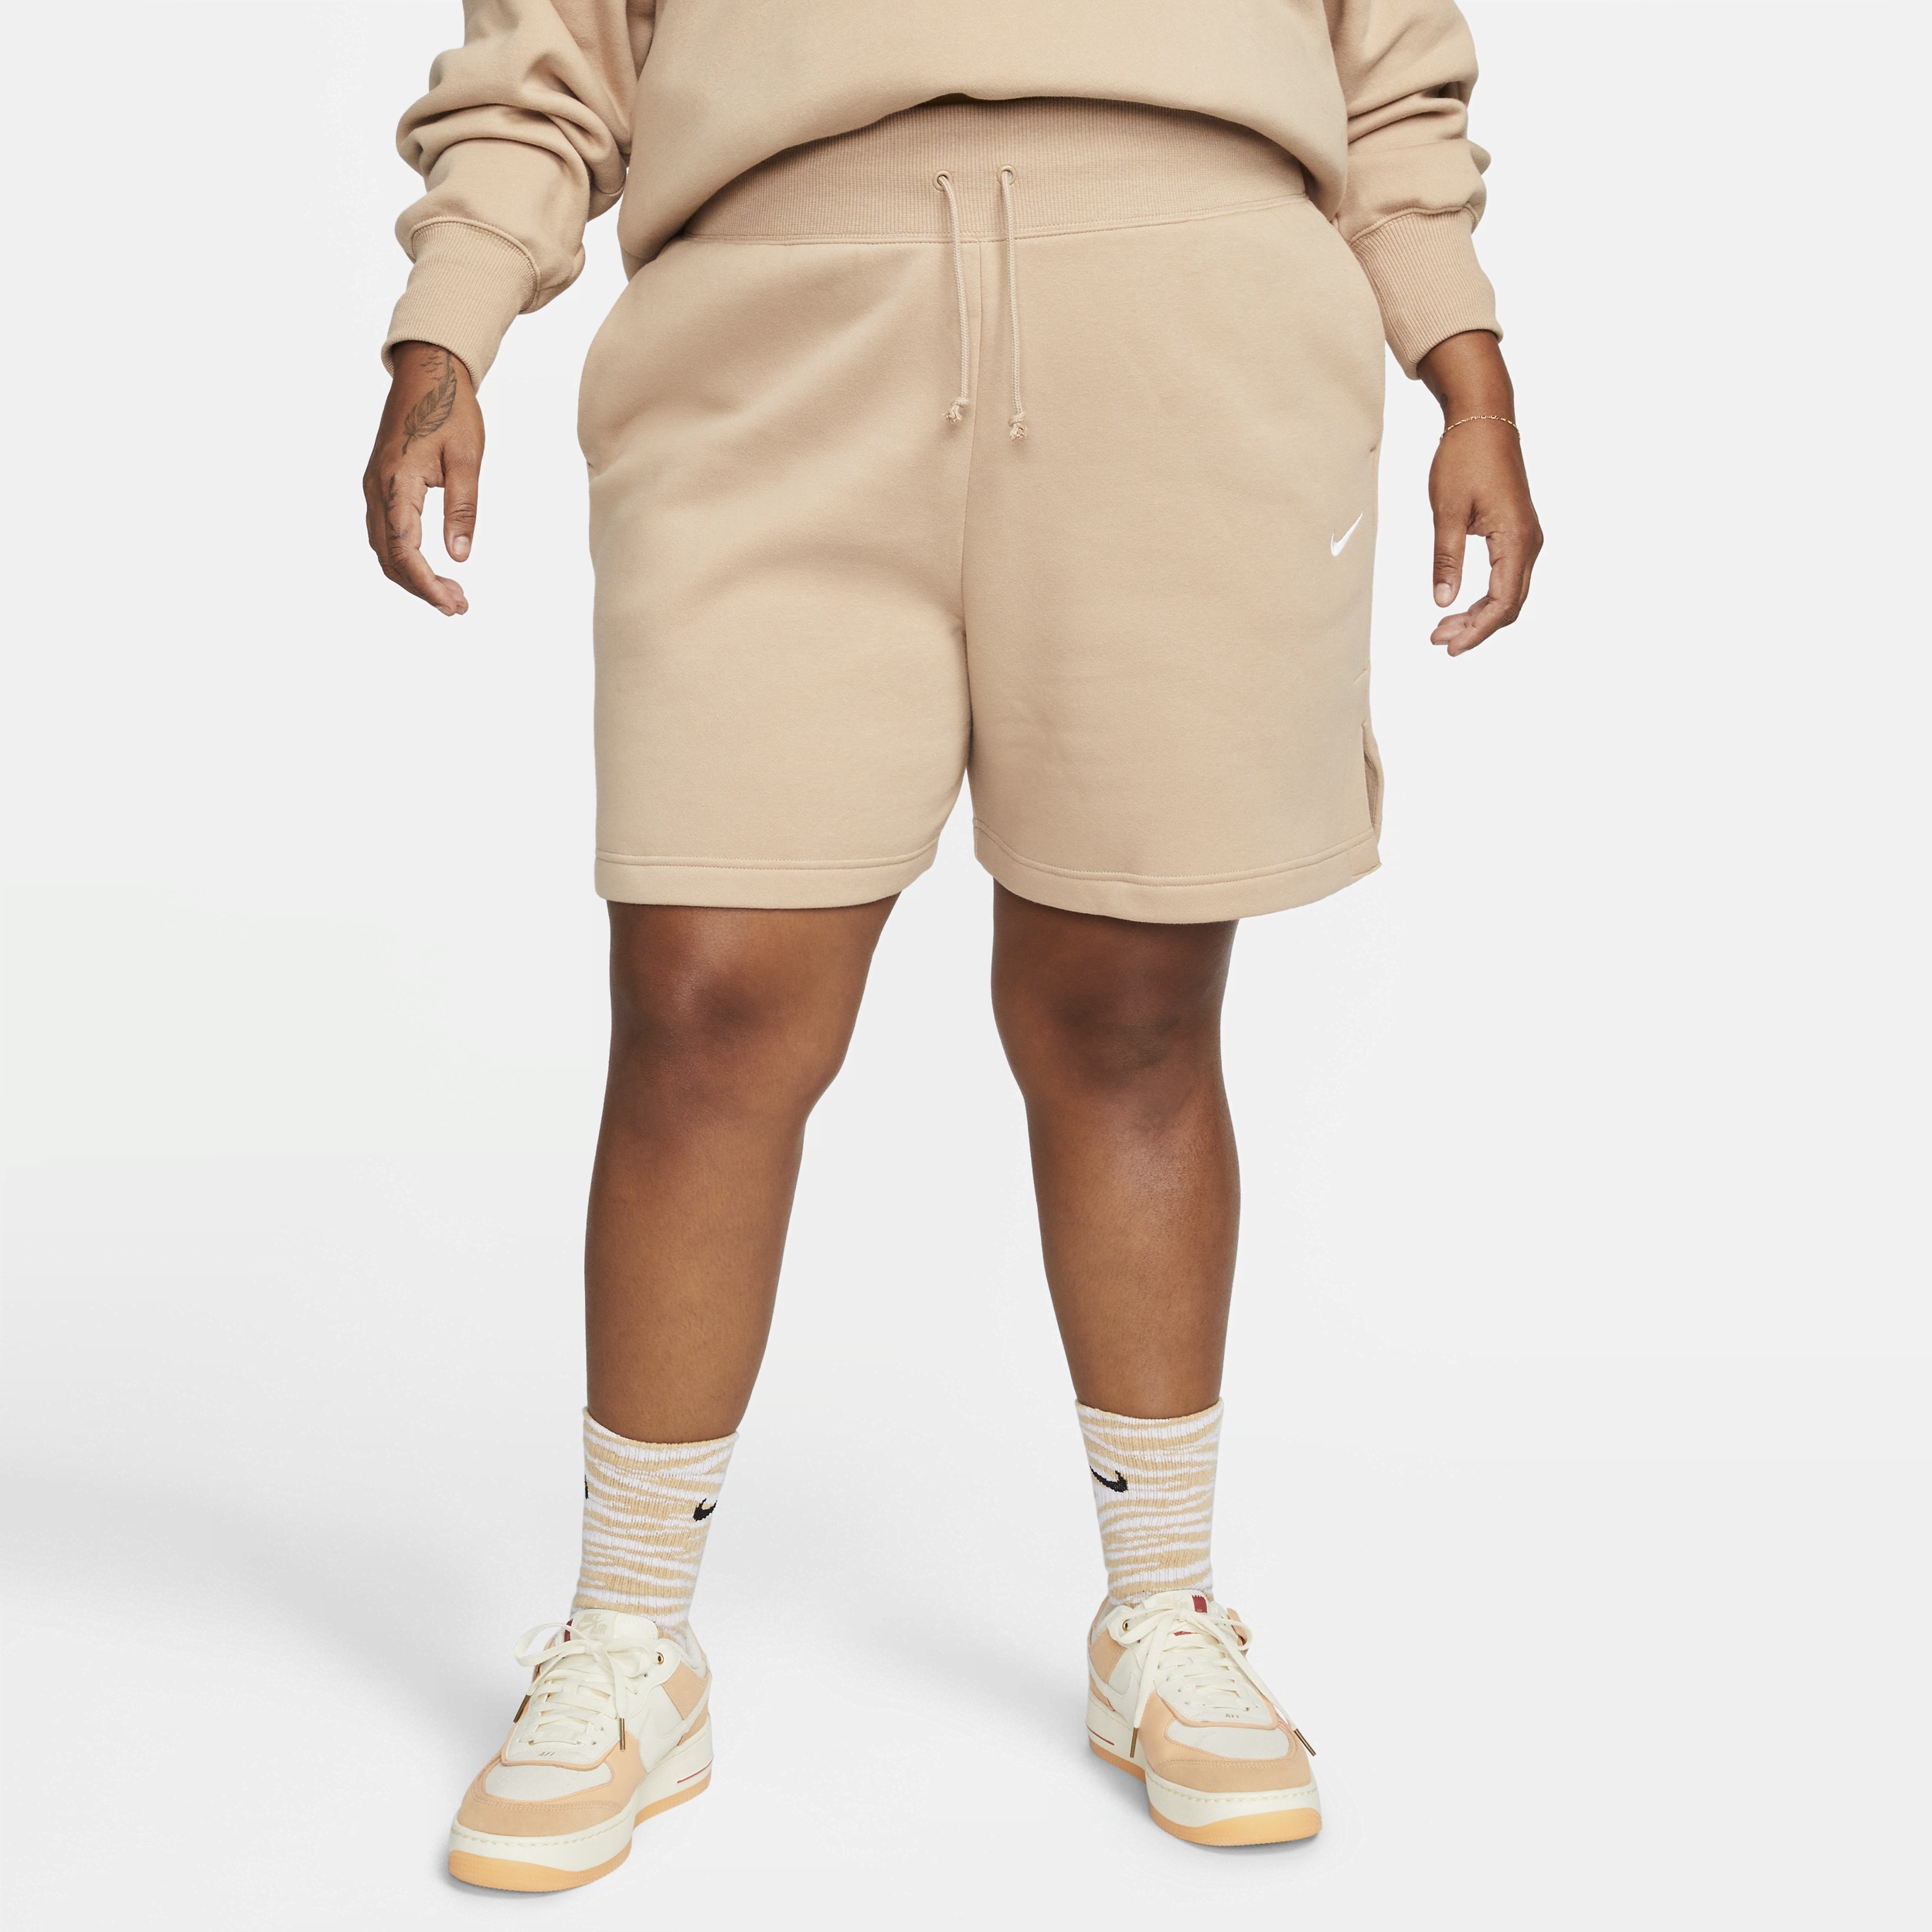 Shorts dal fit ampio a vita alta Nike Sportswear Phoenix Fleece – Donna - Marrone